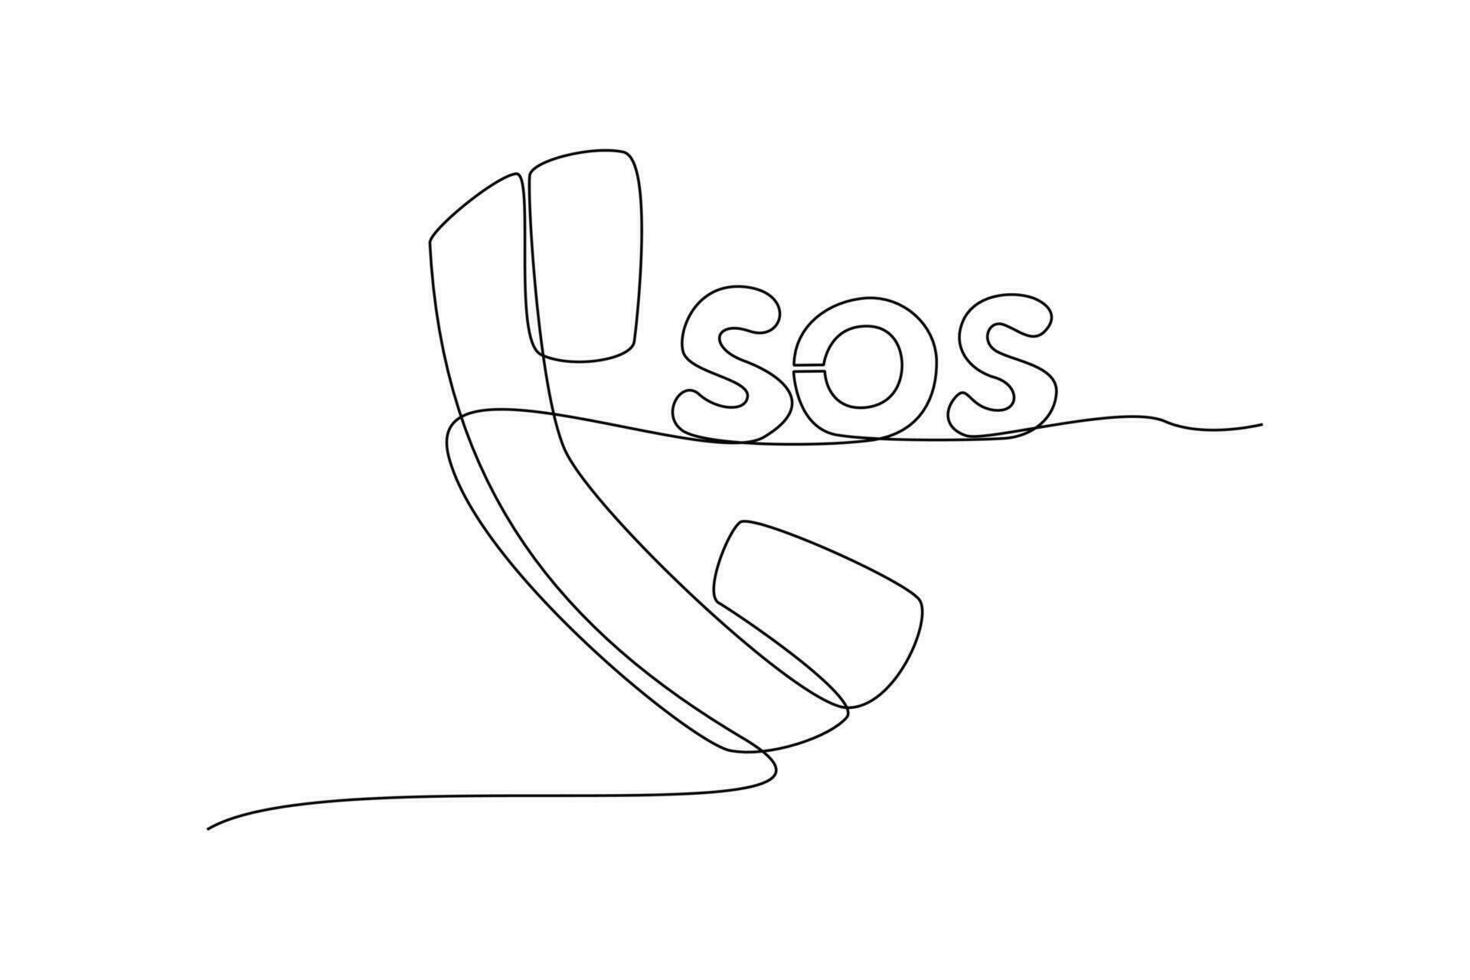 kontinuerlig en linje teckning de telefon samtal nödsituation sos. nödsituation sos begrepp. enda linje teckning design grafisk vektor illustration